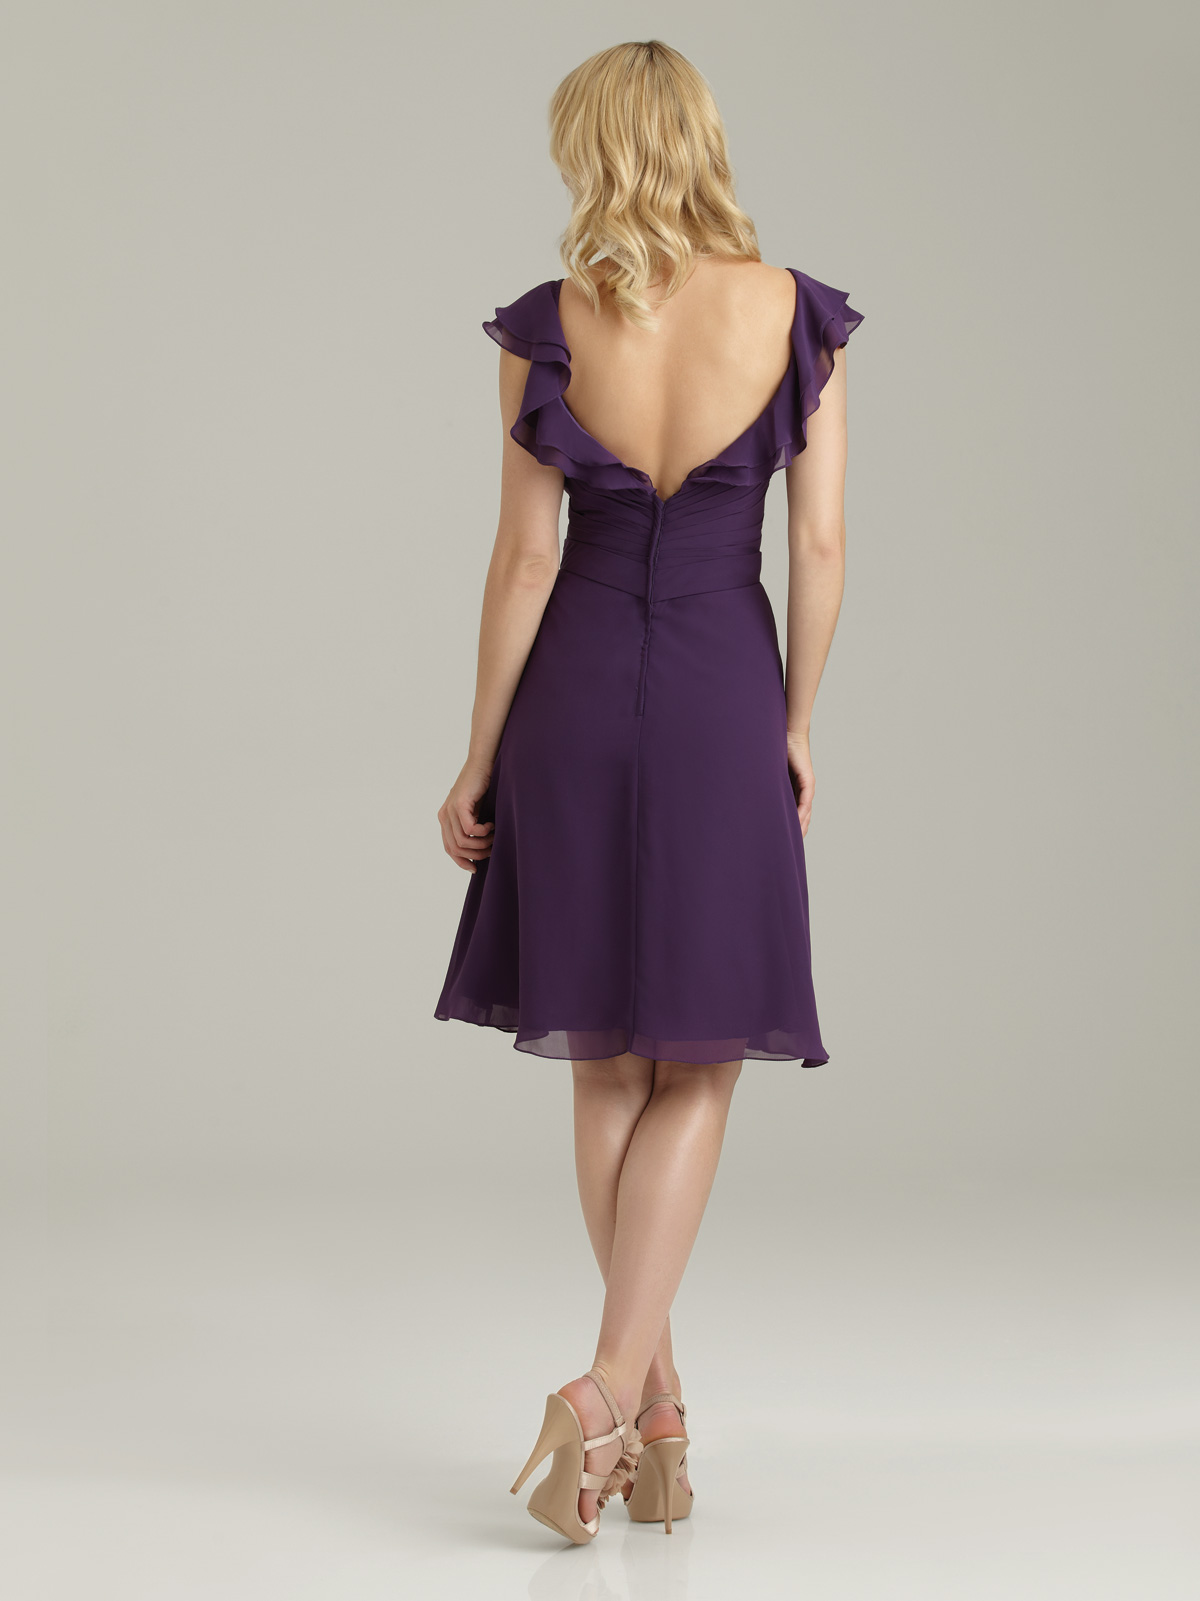 short purple bridesmaid dress 